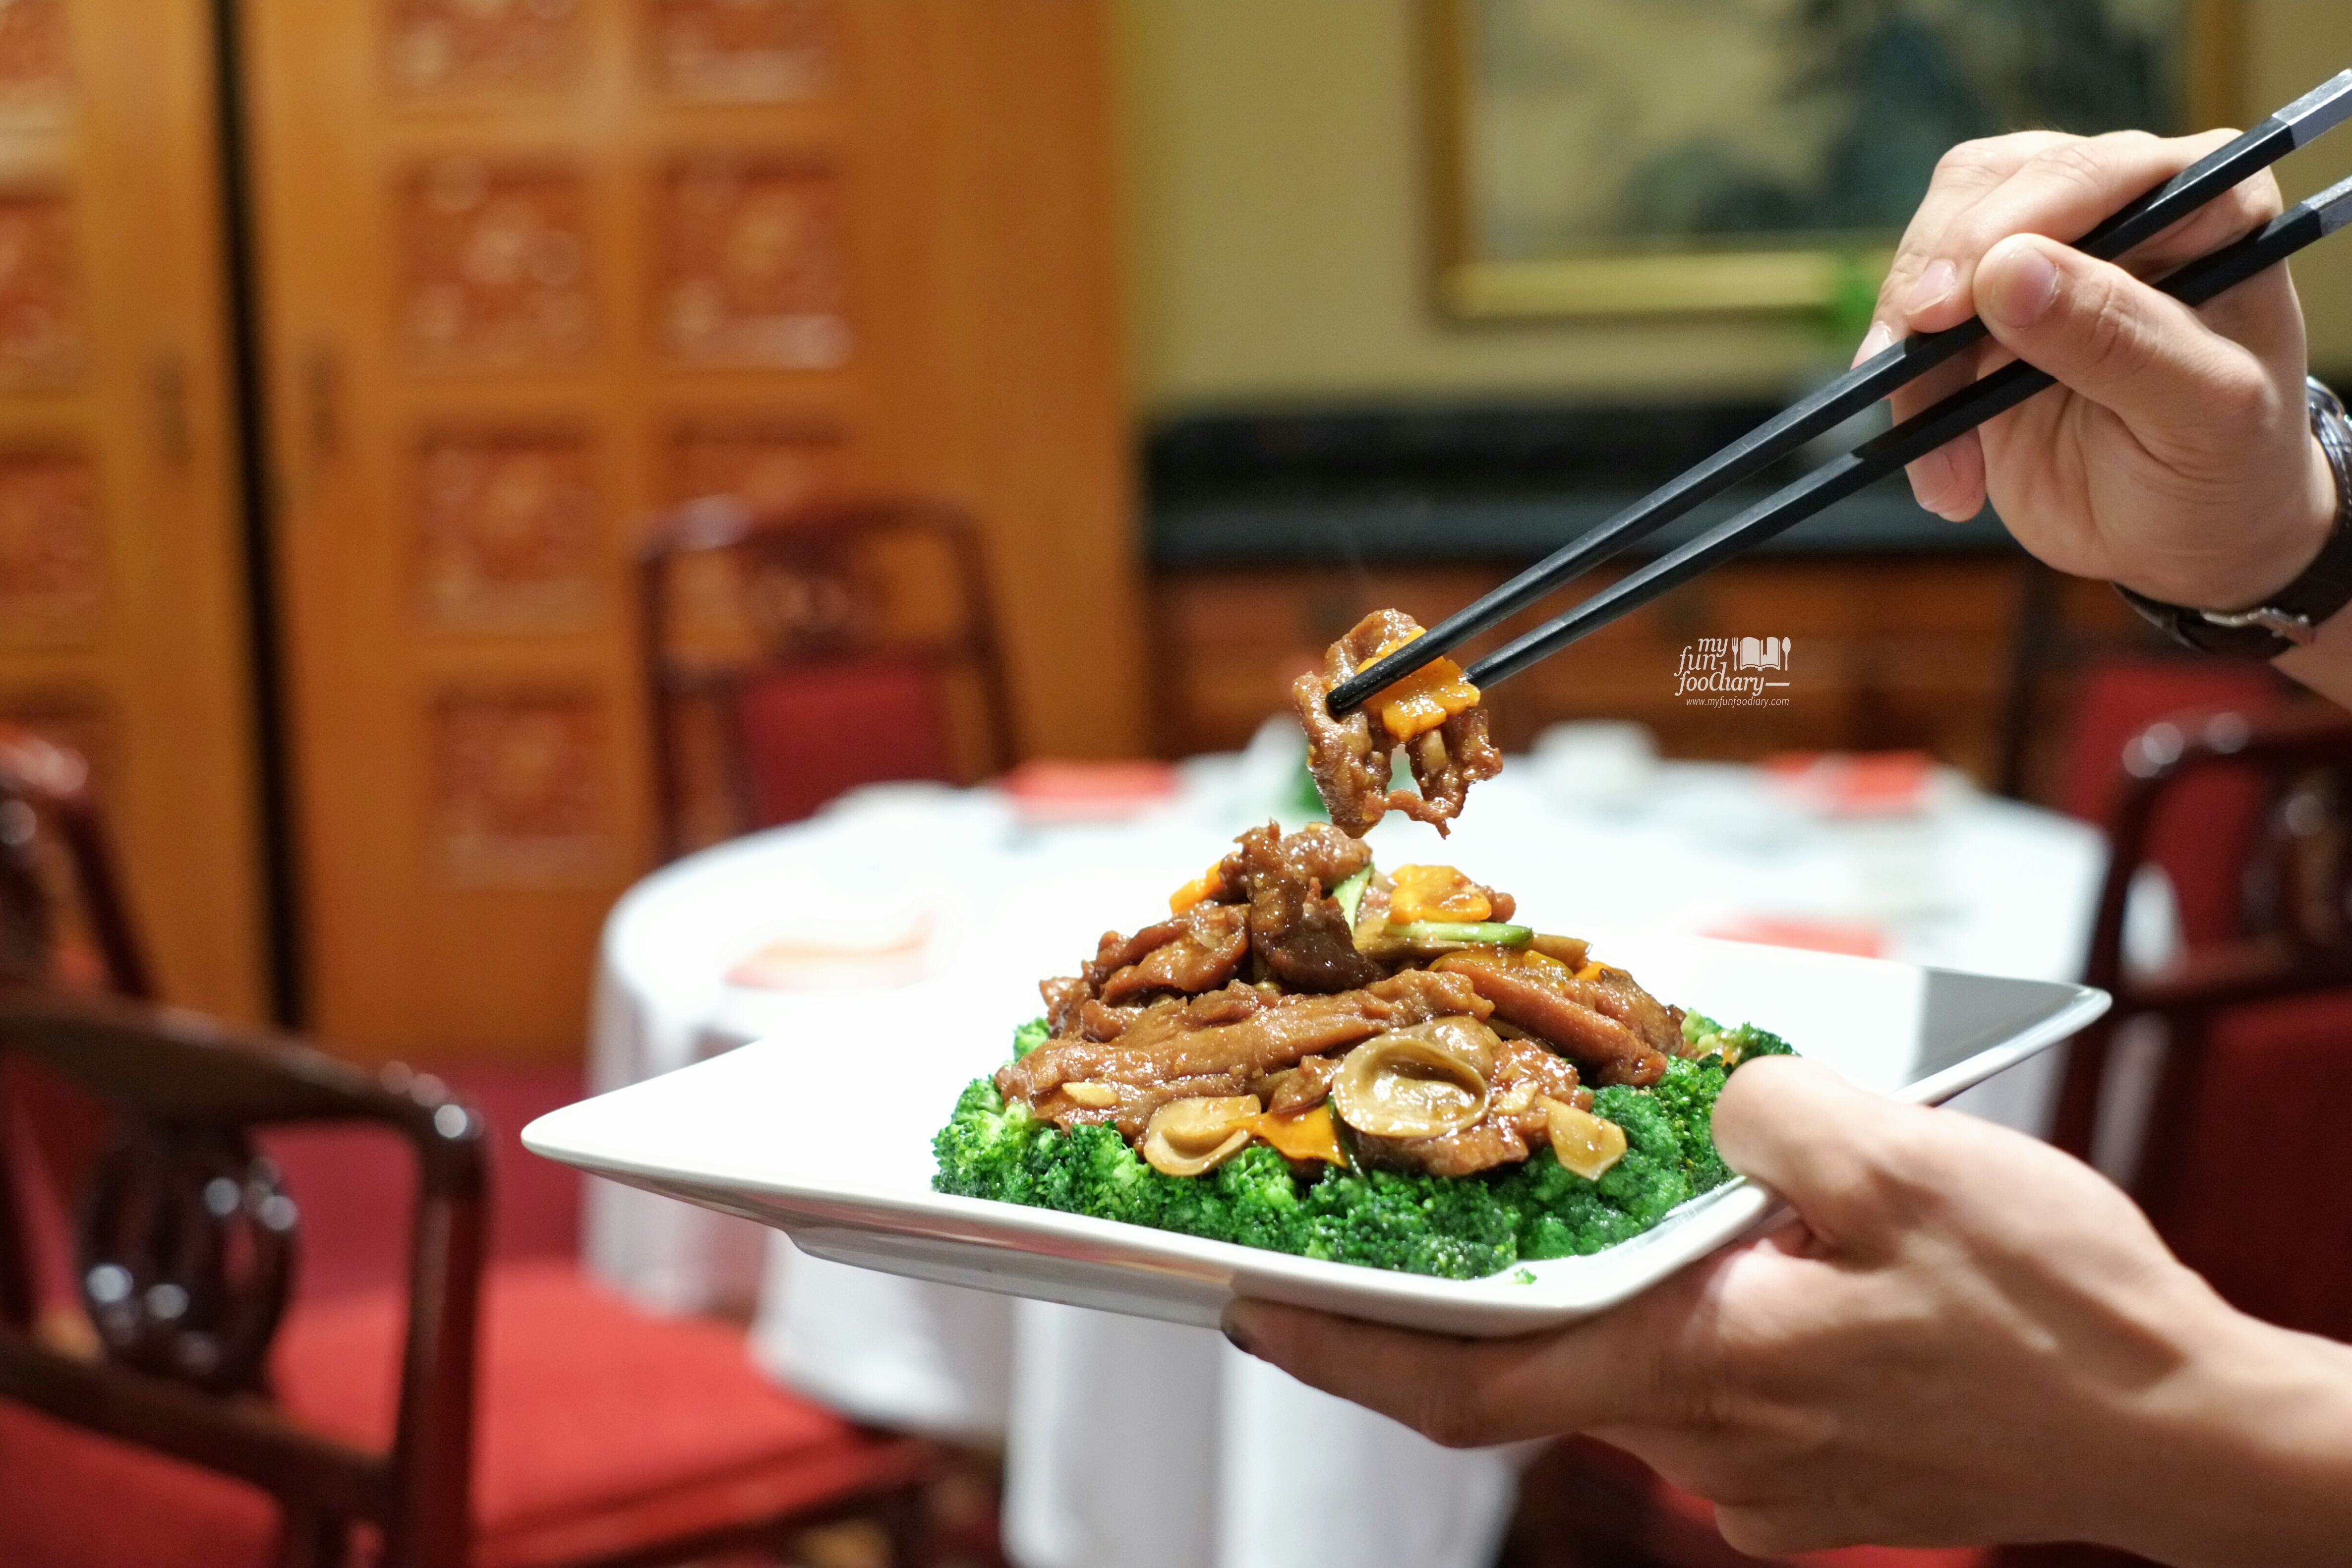 Sliced Beef with Garden Greens at Shang Palace Shangrila Surabaya by Myfunfoodiary